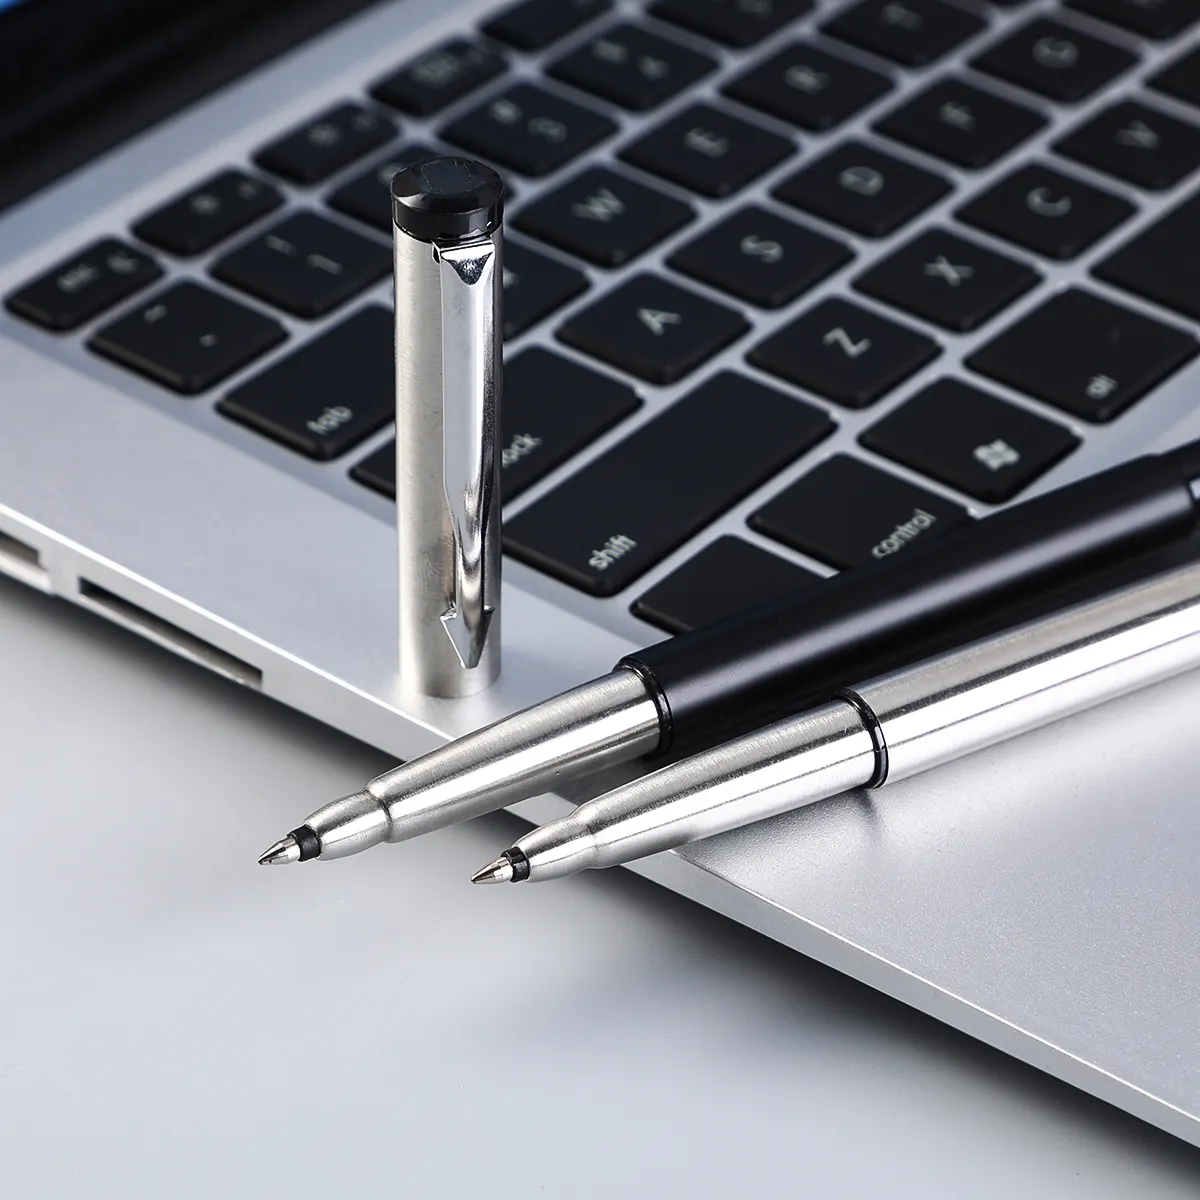 Hot sales luxury business gift pen parker roller ball pen original brand pen with customized logo